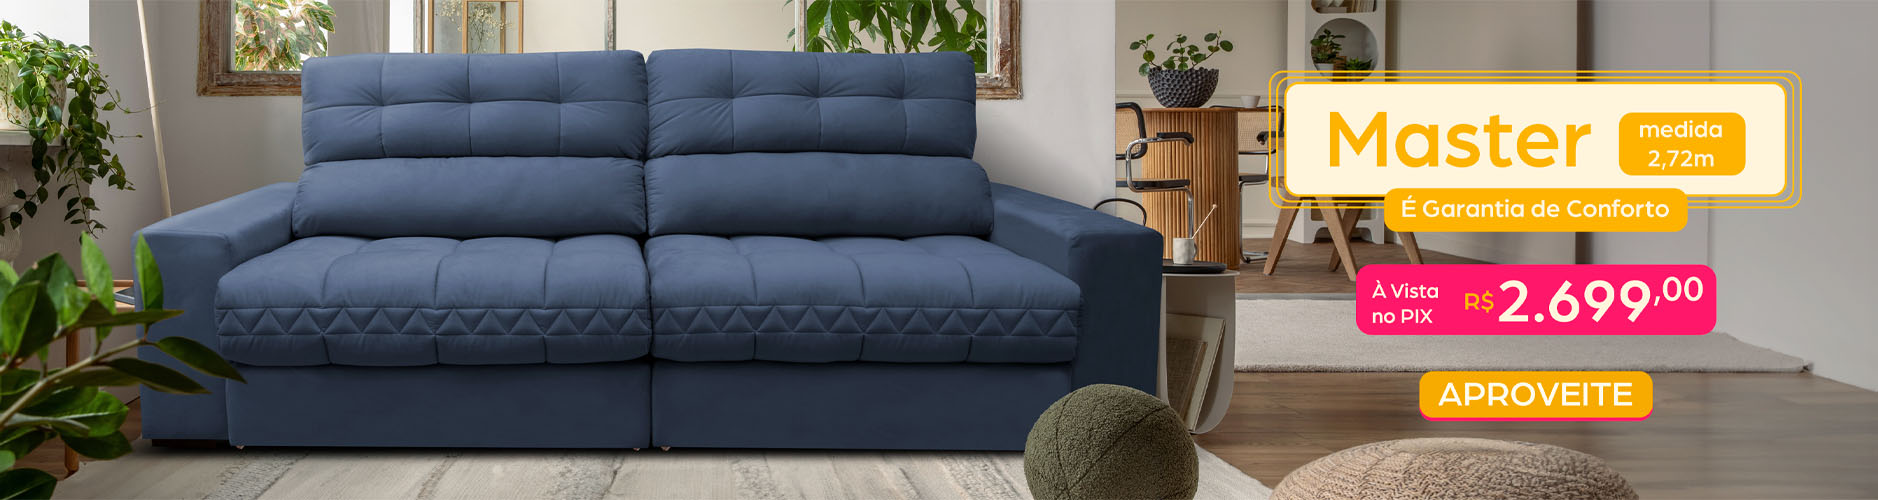 oferta sofa master cama inbox